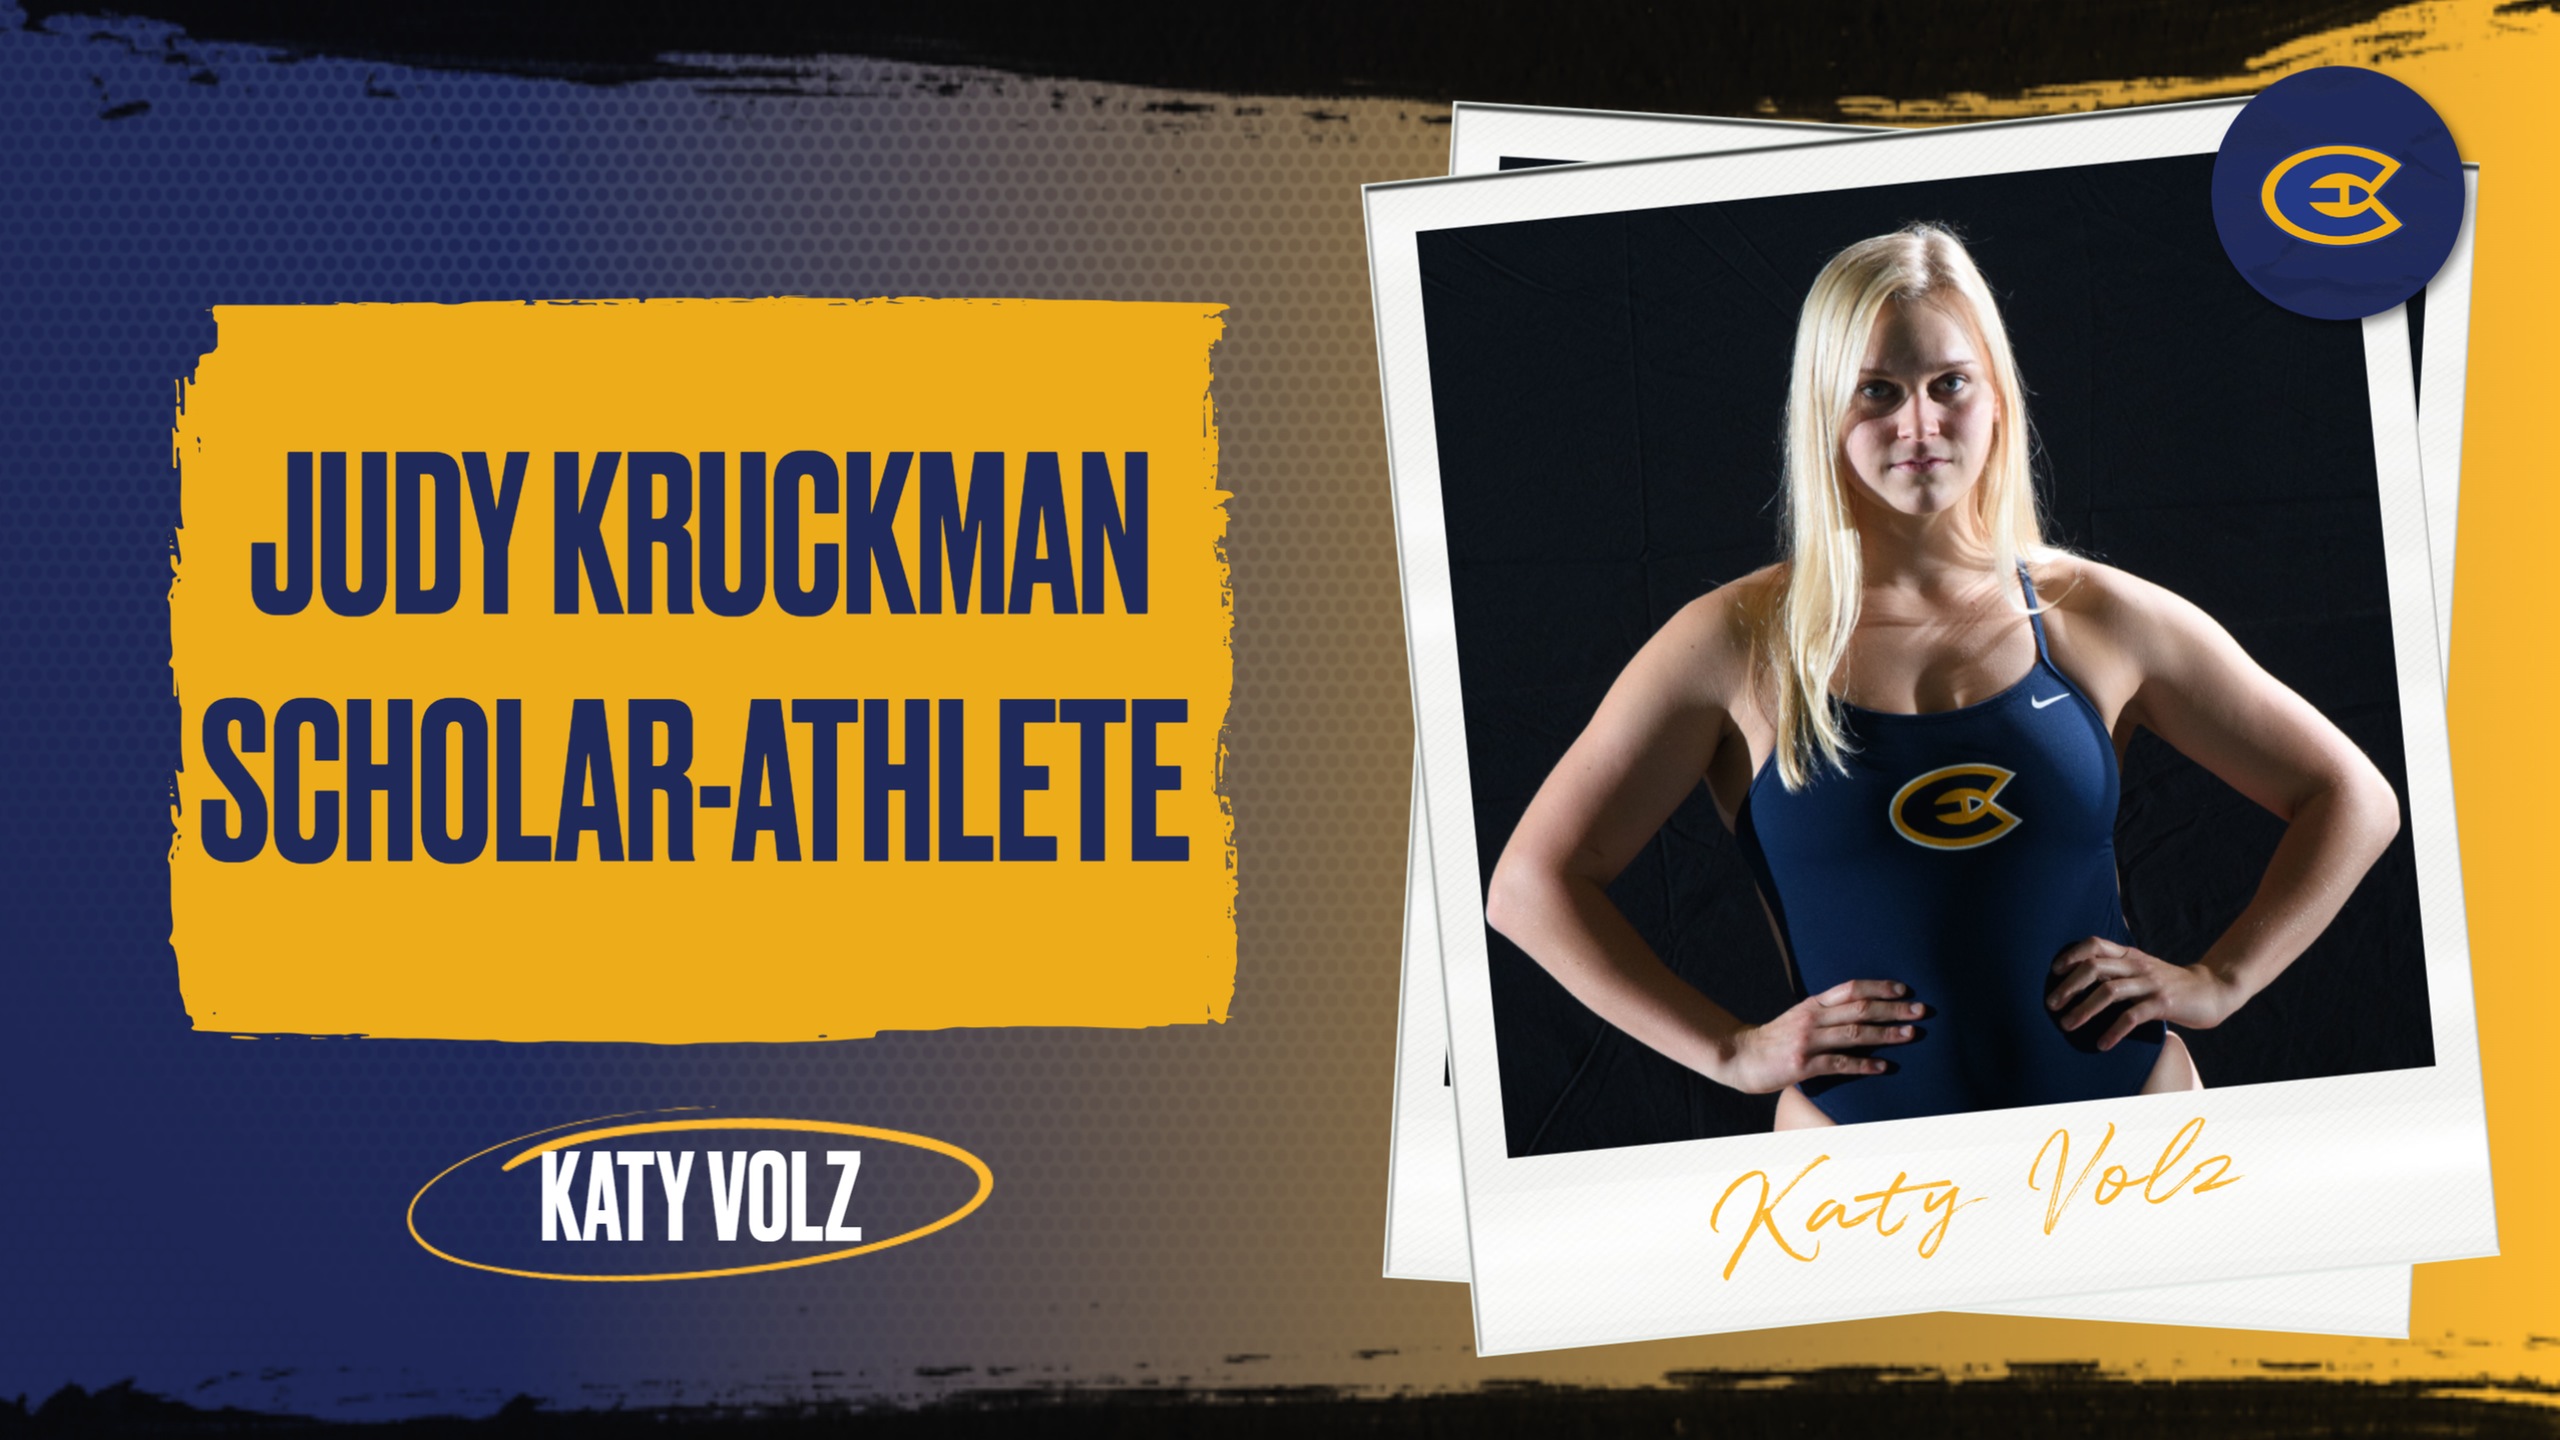 Volz wins Judy Kruckman Scholar-Athlete Award